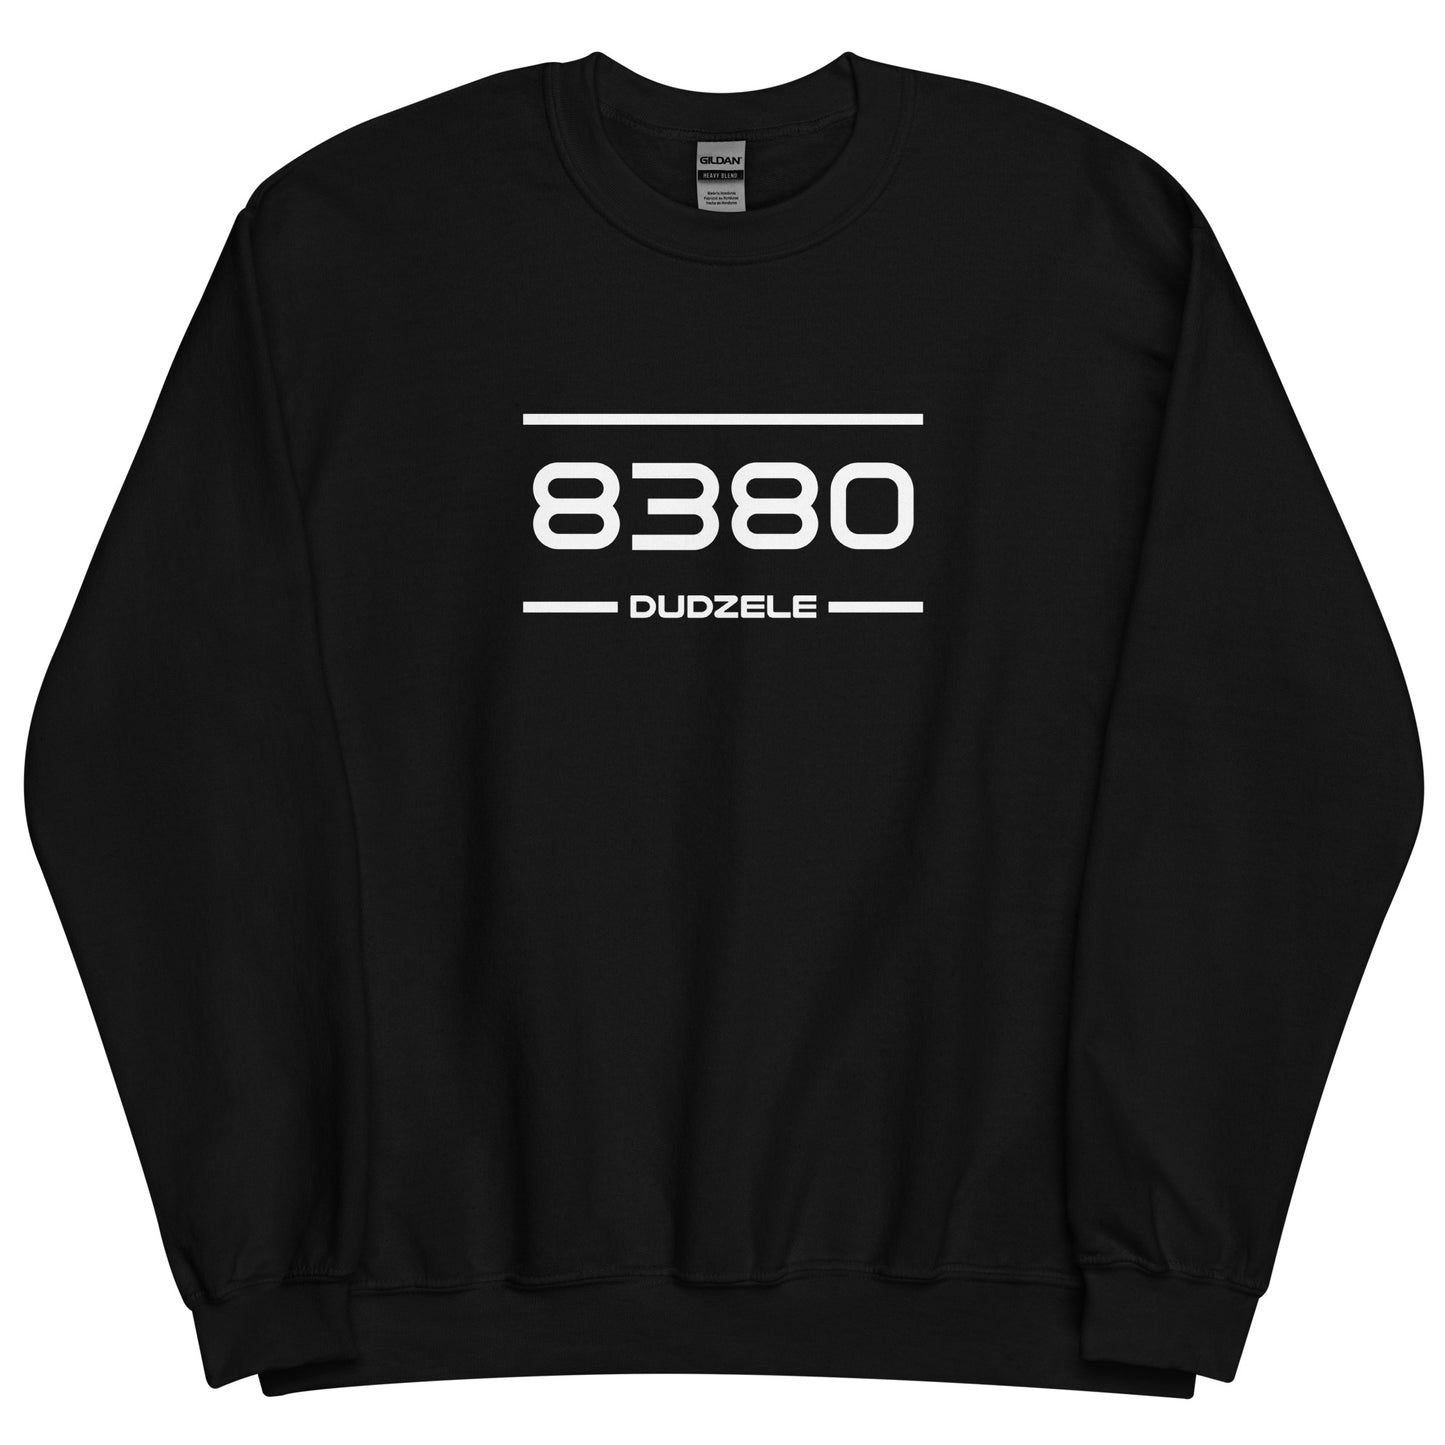 Sweater - 8380 - Dudzele (M/V)